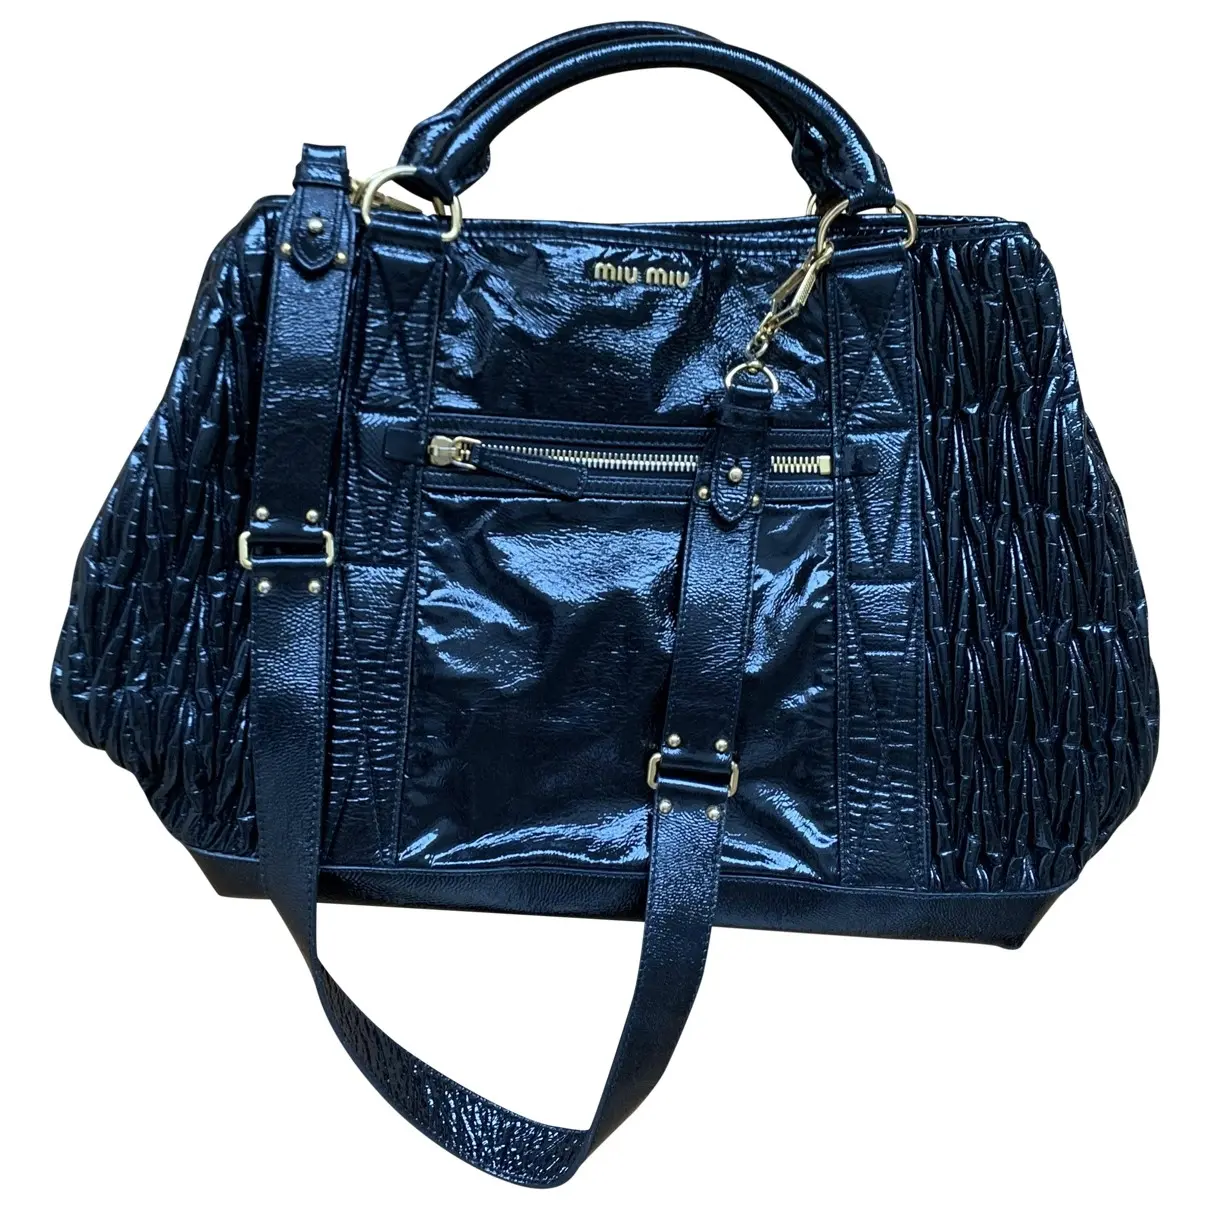 Matelassé patent leather handbag Miu Miu